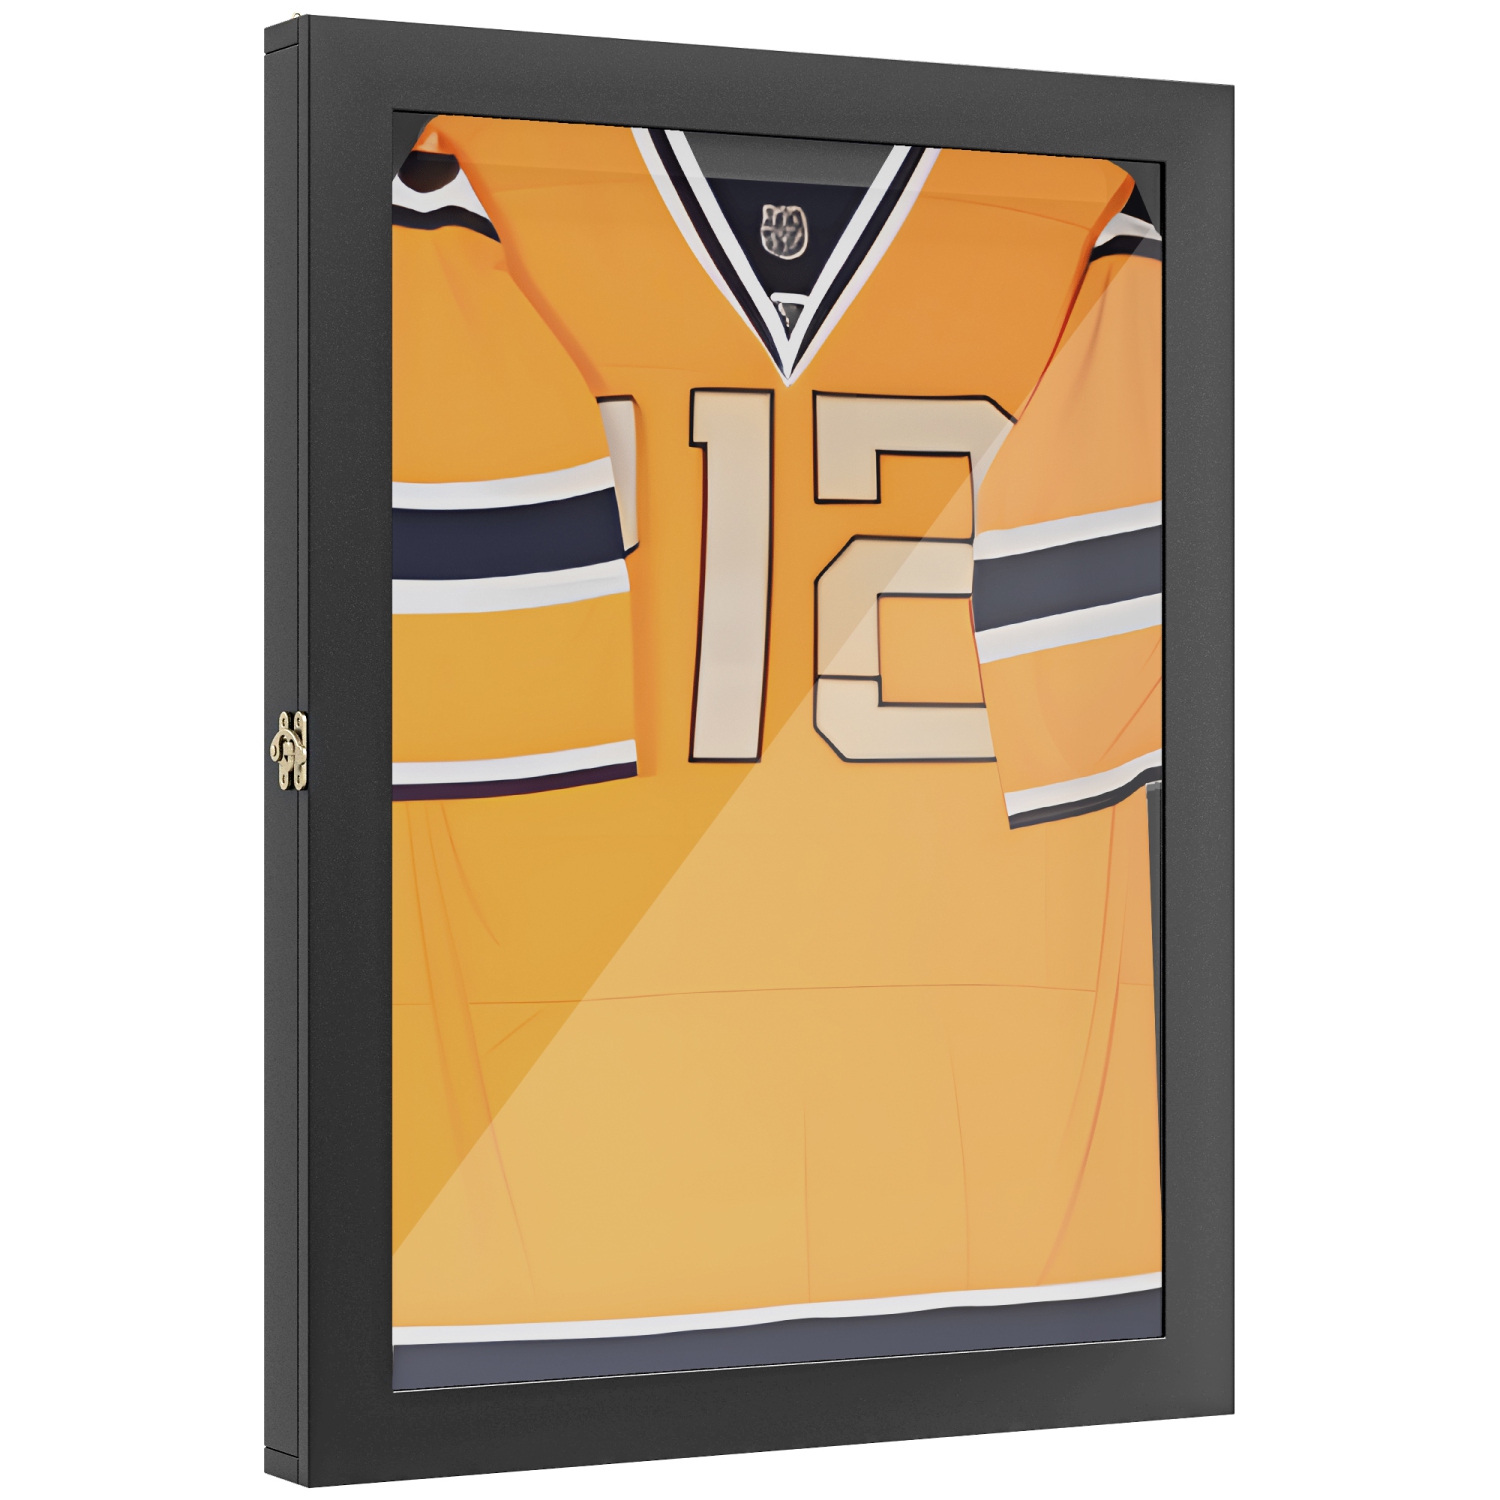 HOMCOM Jersey Display Frame Case, Acrylic Sports Shirt Shadow Box for Basketball Football Baseball (Black, 24" W x 32" H)